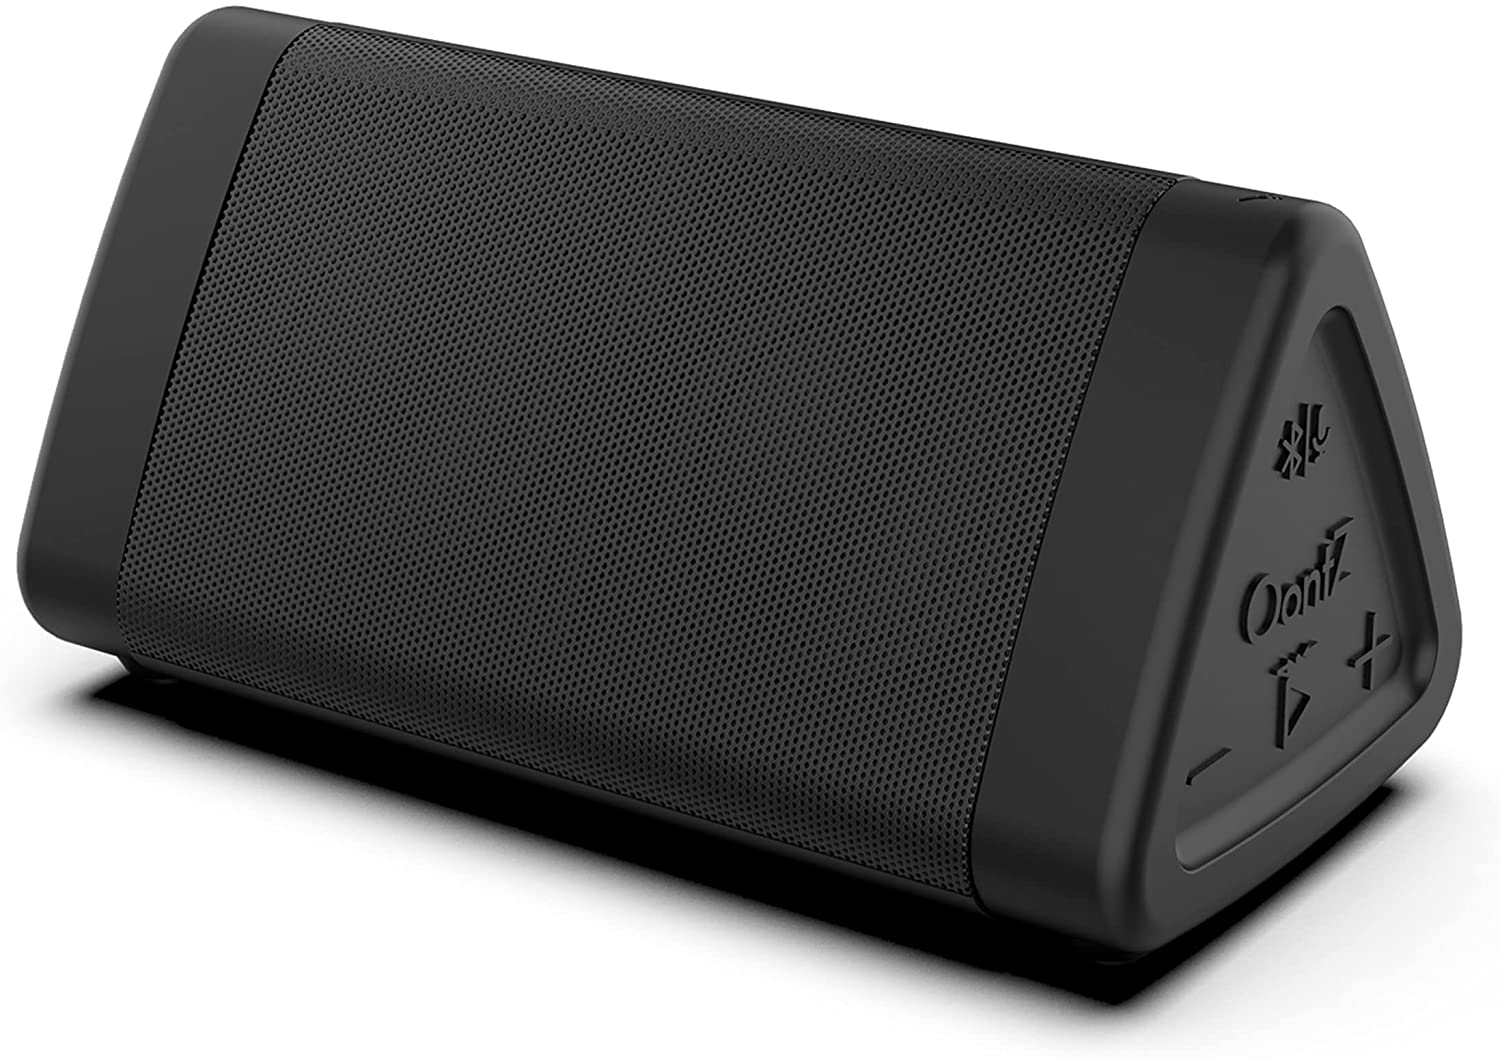 OontZ Angle 3 IPX5 10W Portable Bluetooth Speaker (Black) $18.18 + Free Shipping w/Prime